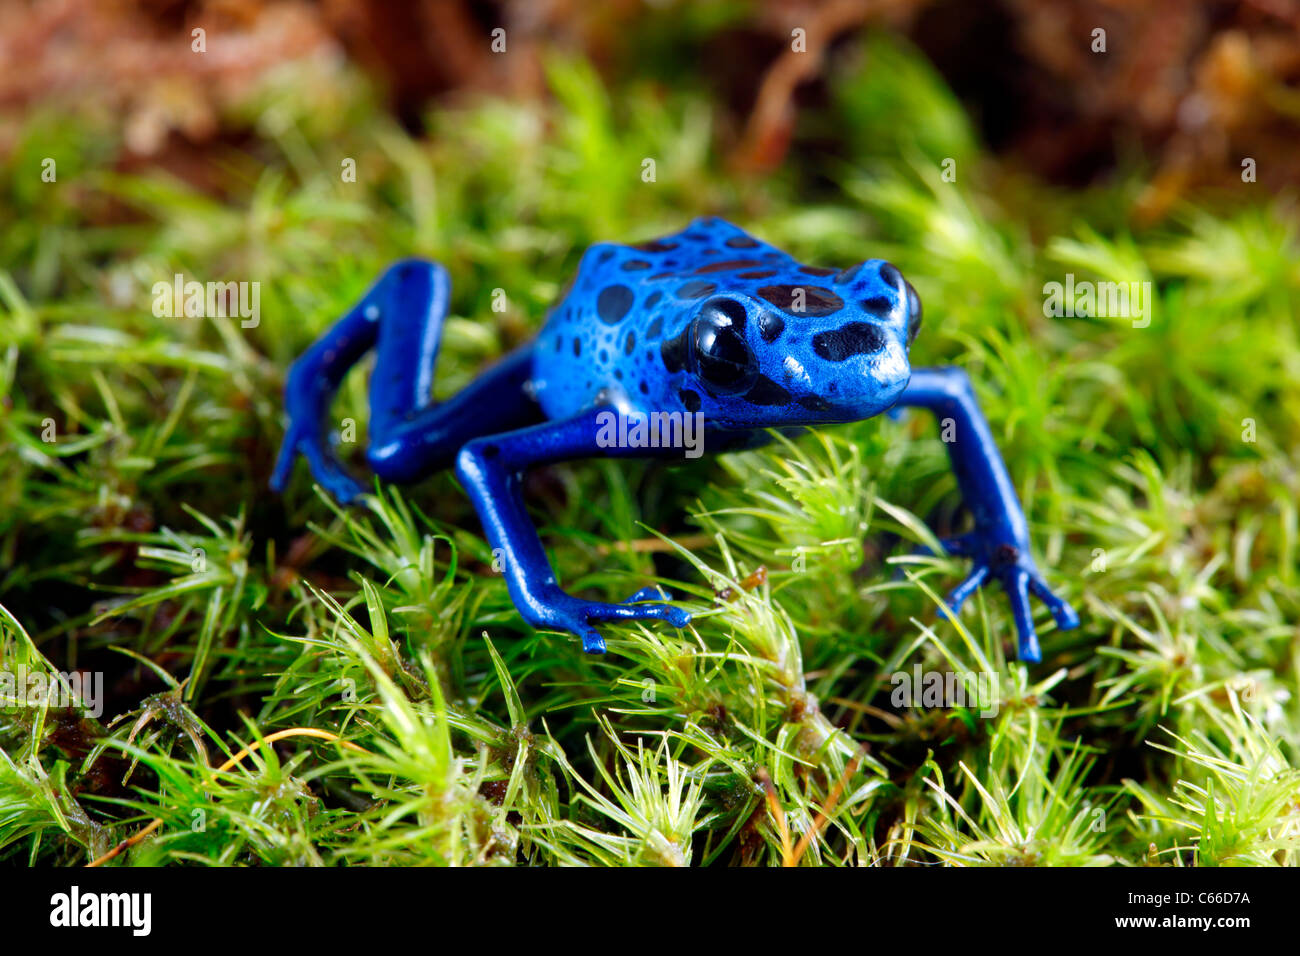 Blue Poison Dart Frog on moss. Stock Photo